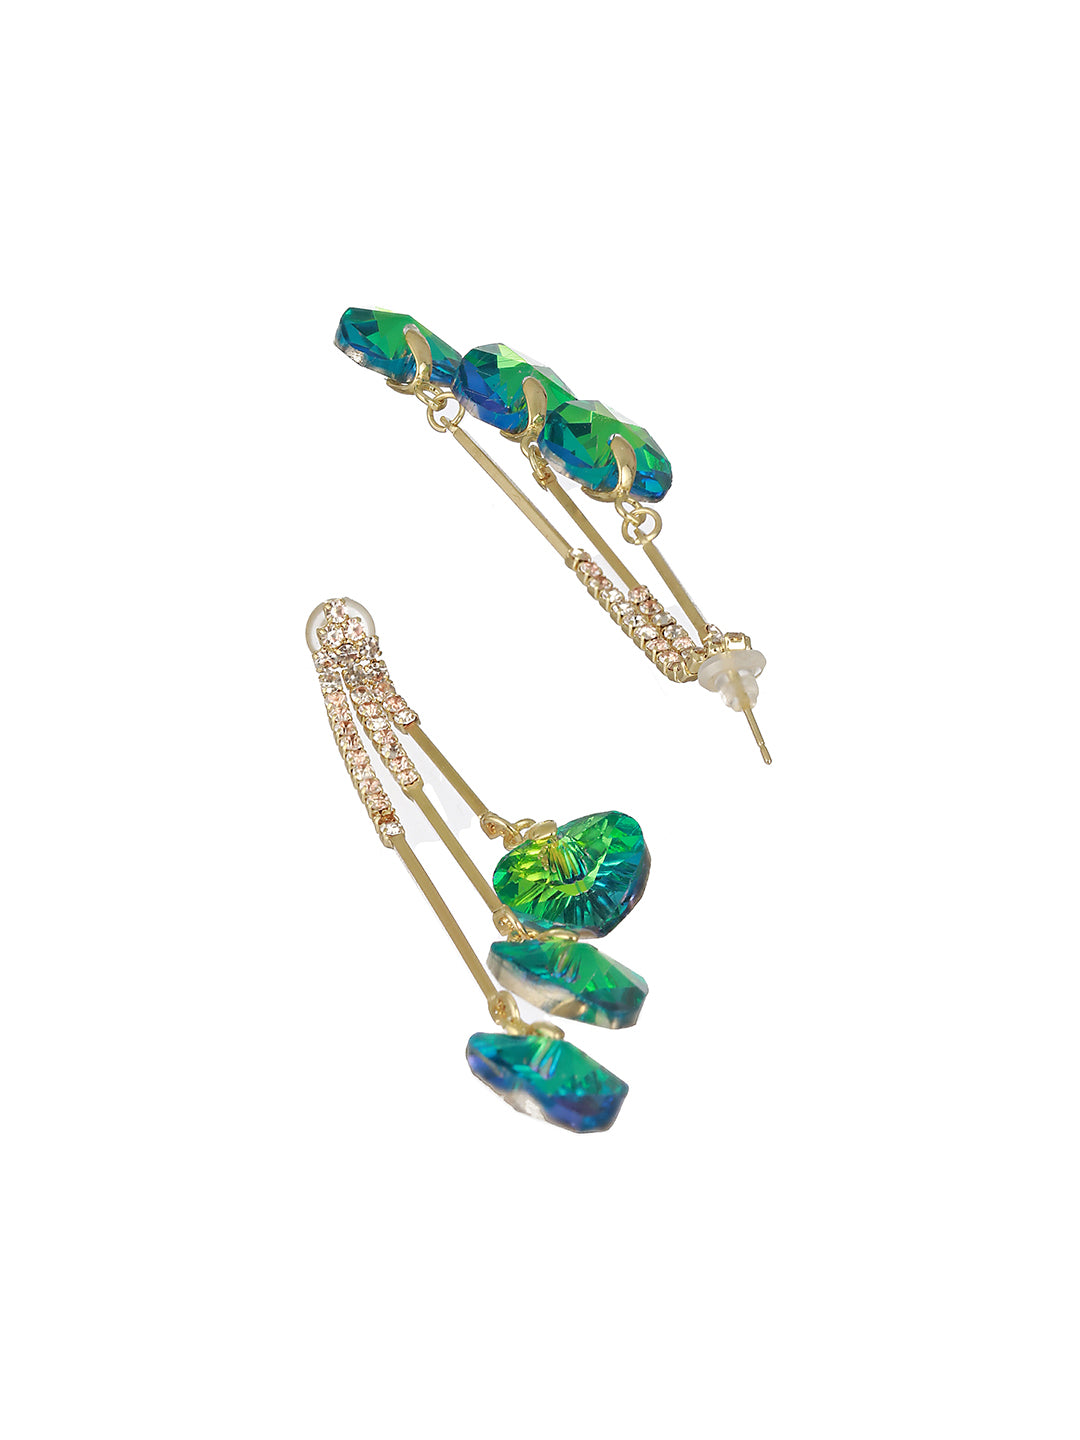 Prita by Priyaasi Green Triple Heart Tassel Studded Gold-Plated Drop Earrings